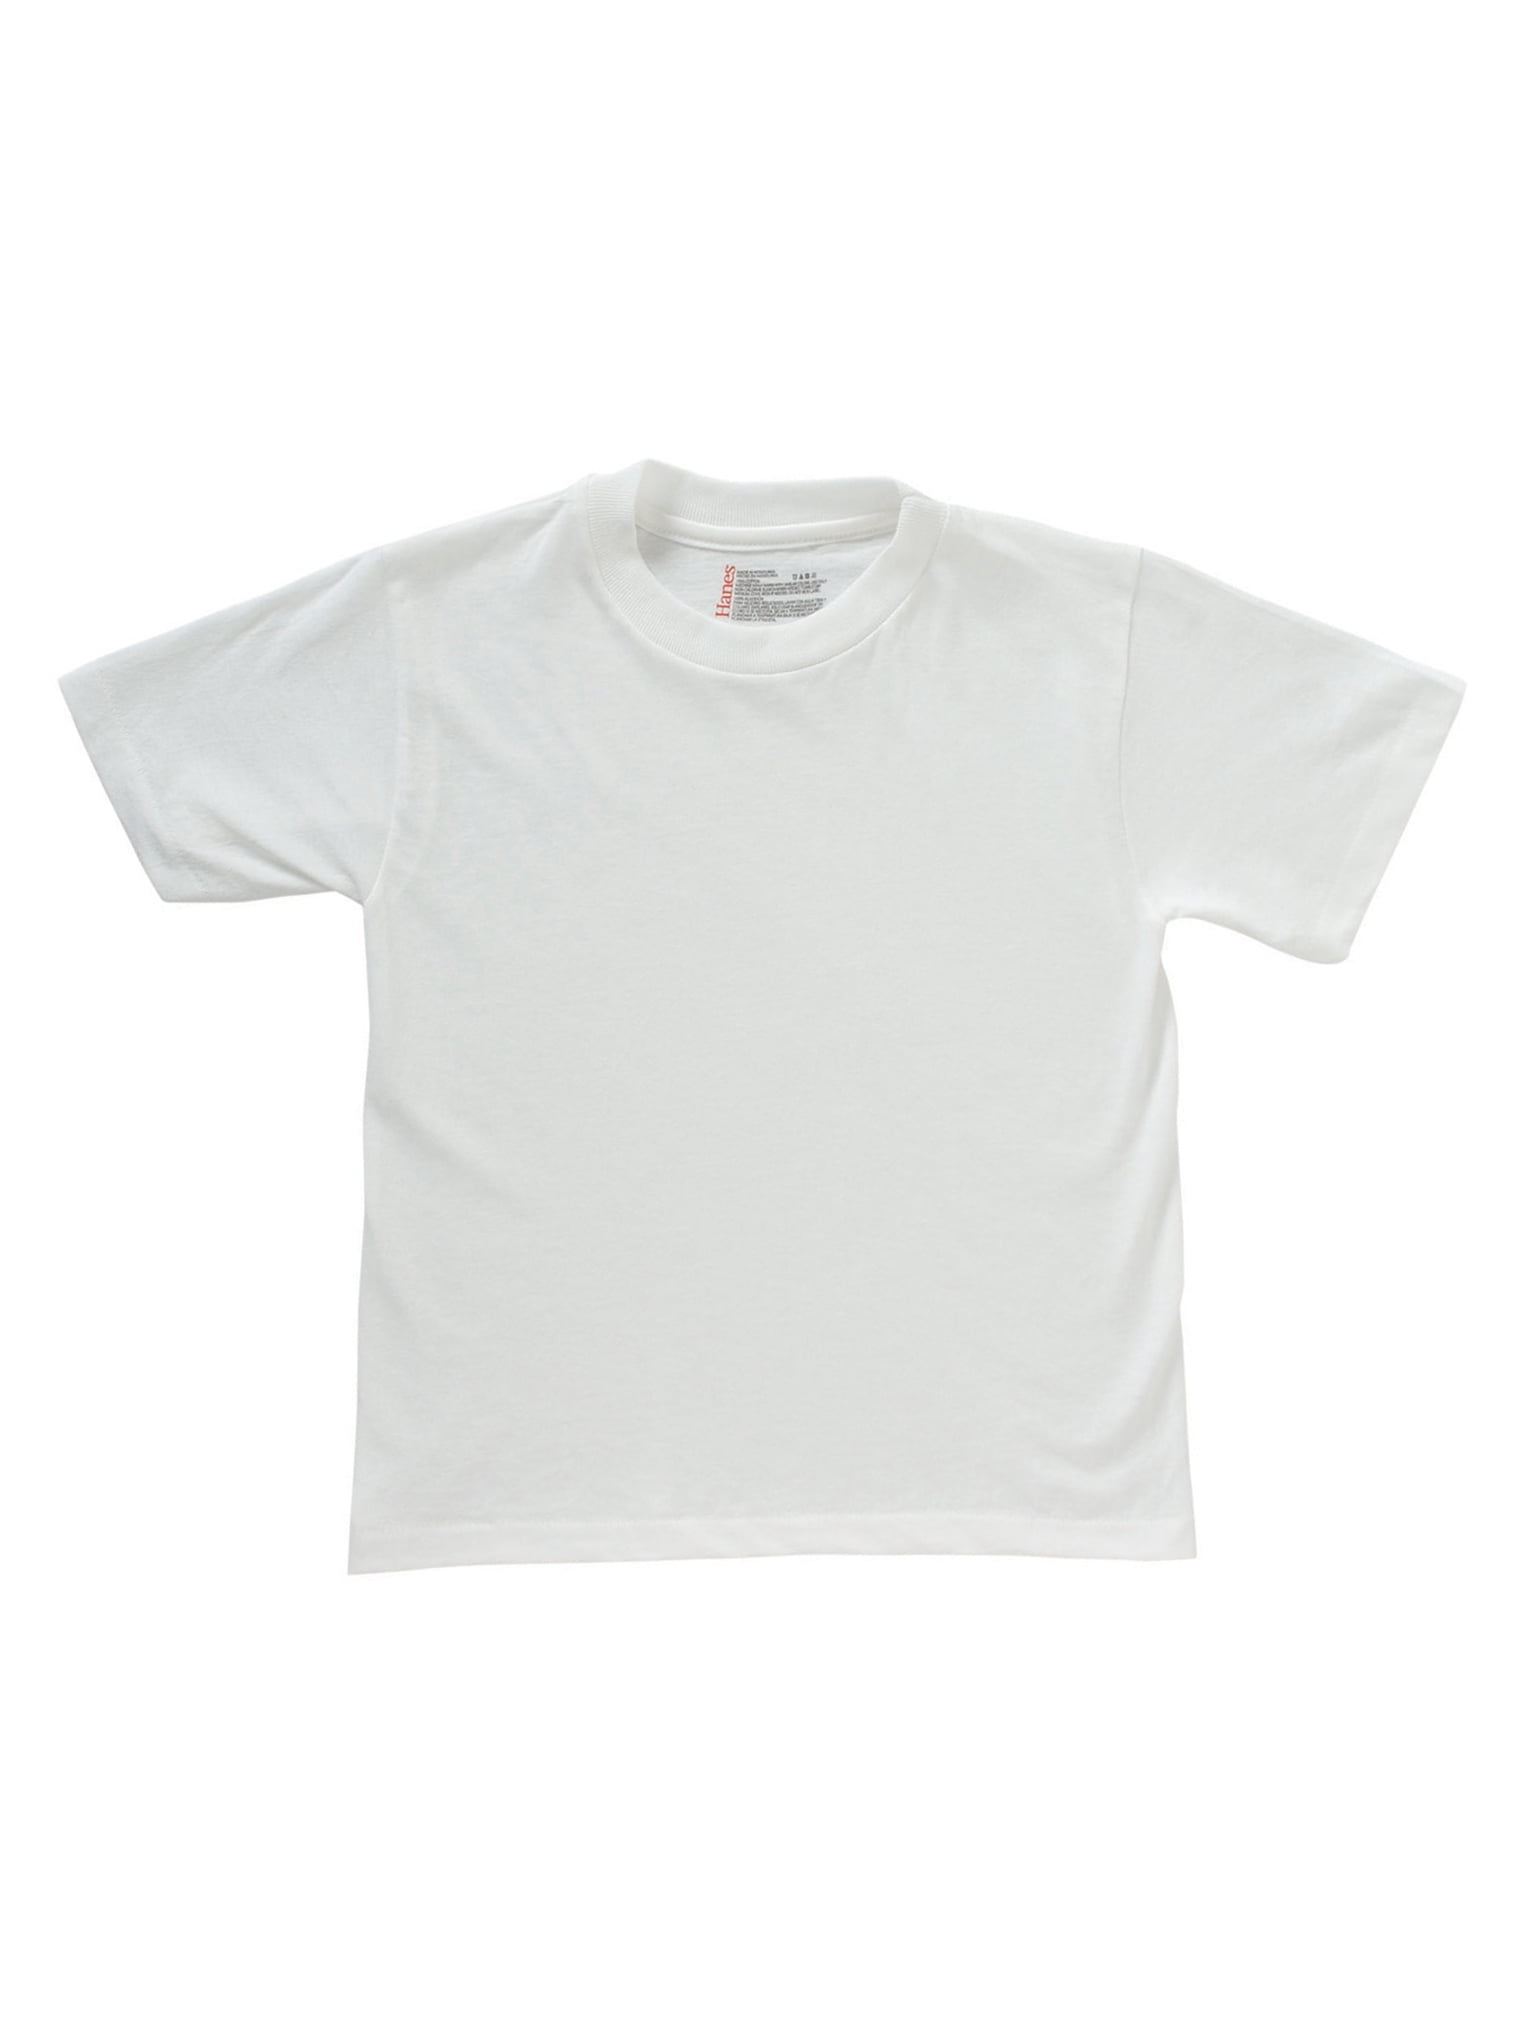 Hanes Boys Undershirt 3 Pack T-Shirt Sizes 6/8 - 18/20 - Walmart.com